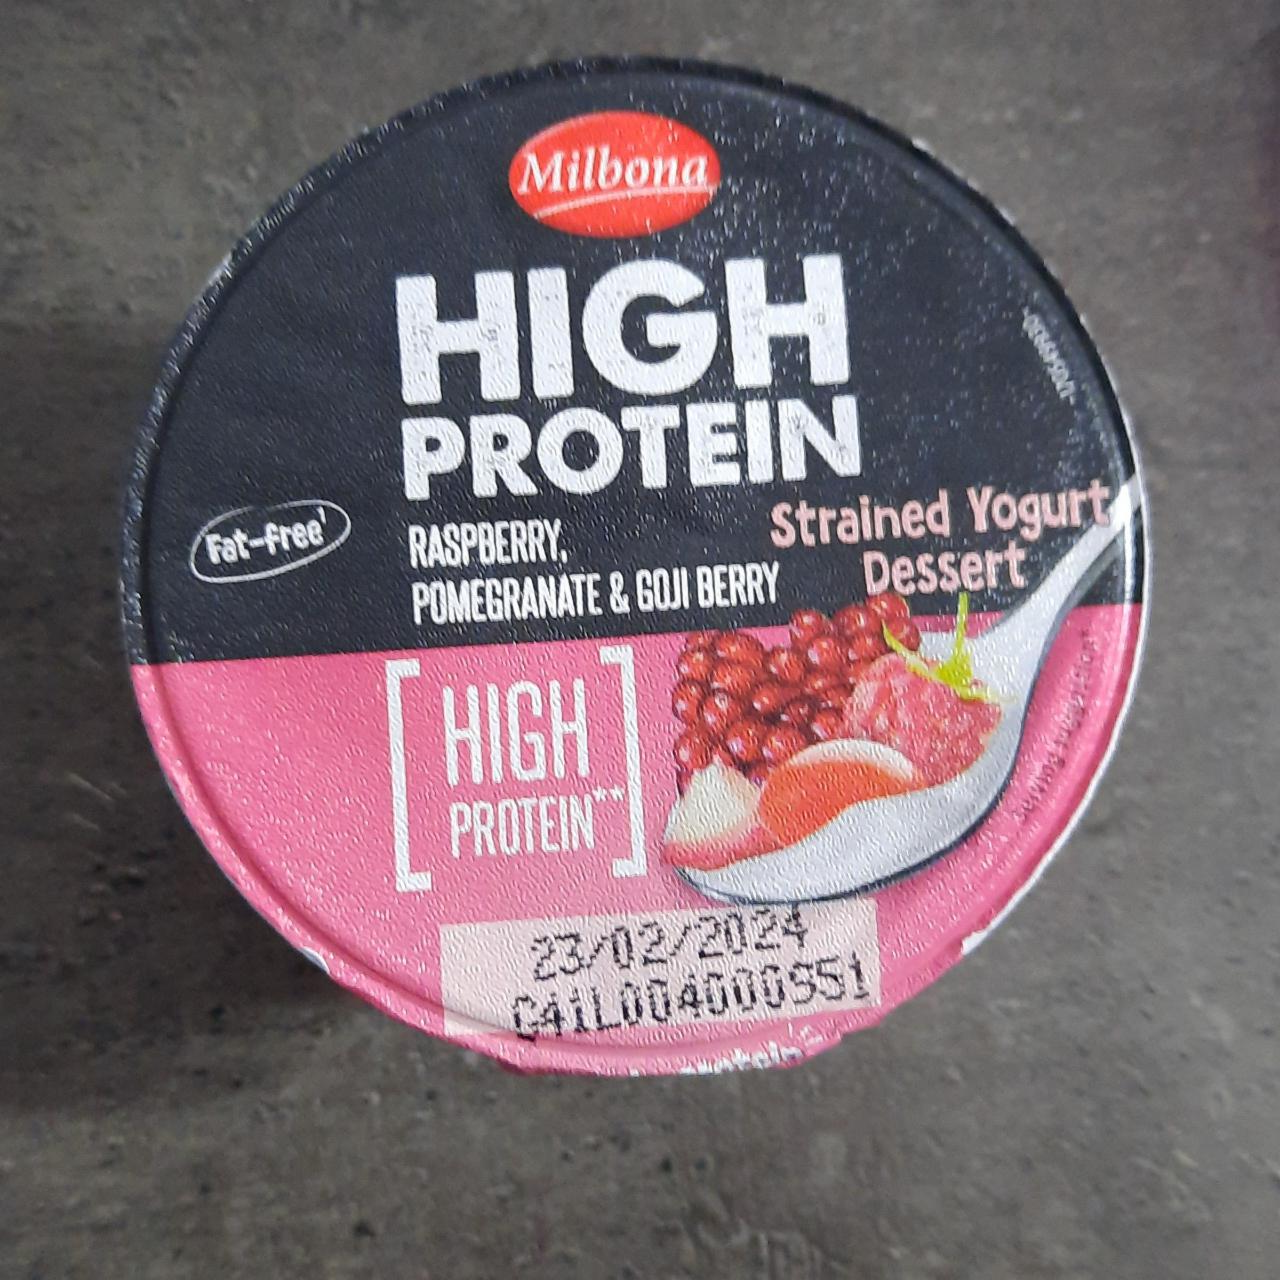 Fotografie - High Protein Raspberry, Pomegranate & Goji Berry Strained Yogurt Dessert Milbona